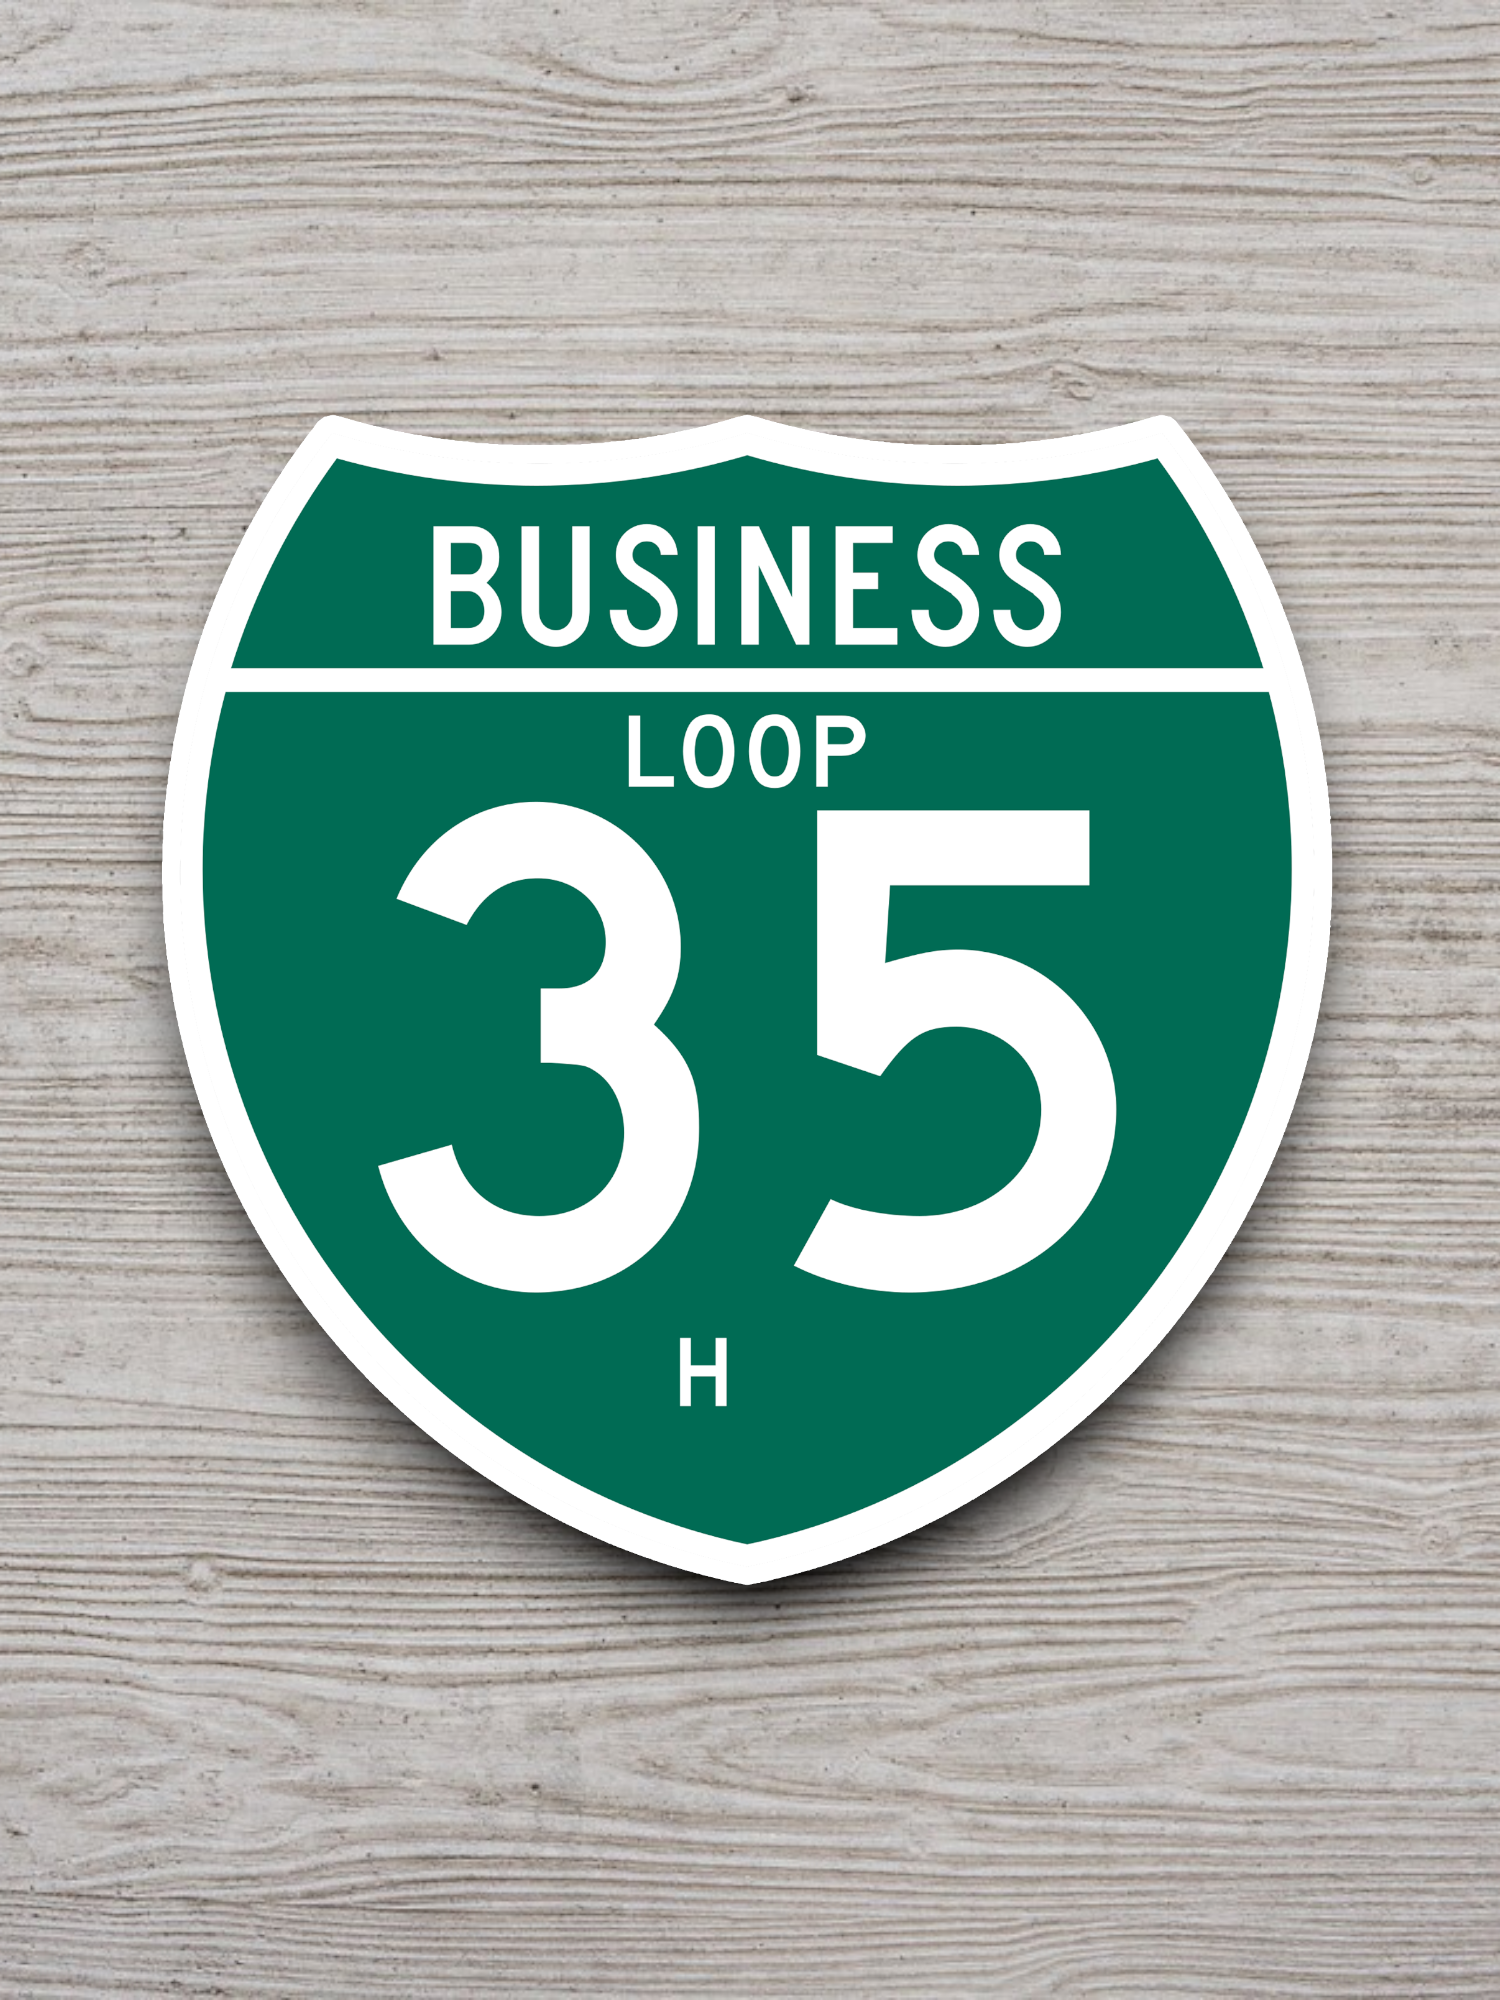 Business Spur Interstate 35-H Texas Texas Road Sign Sticker